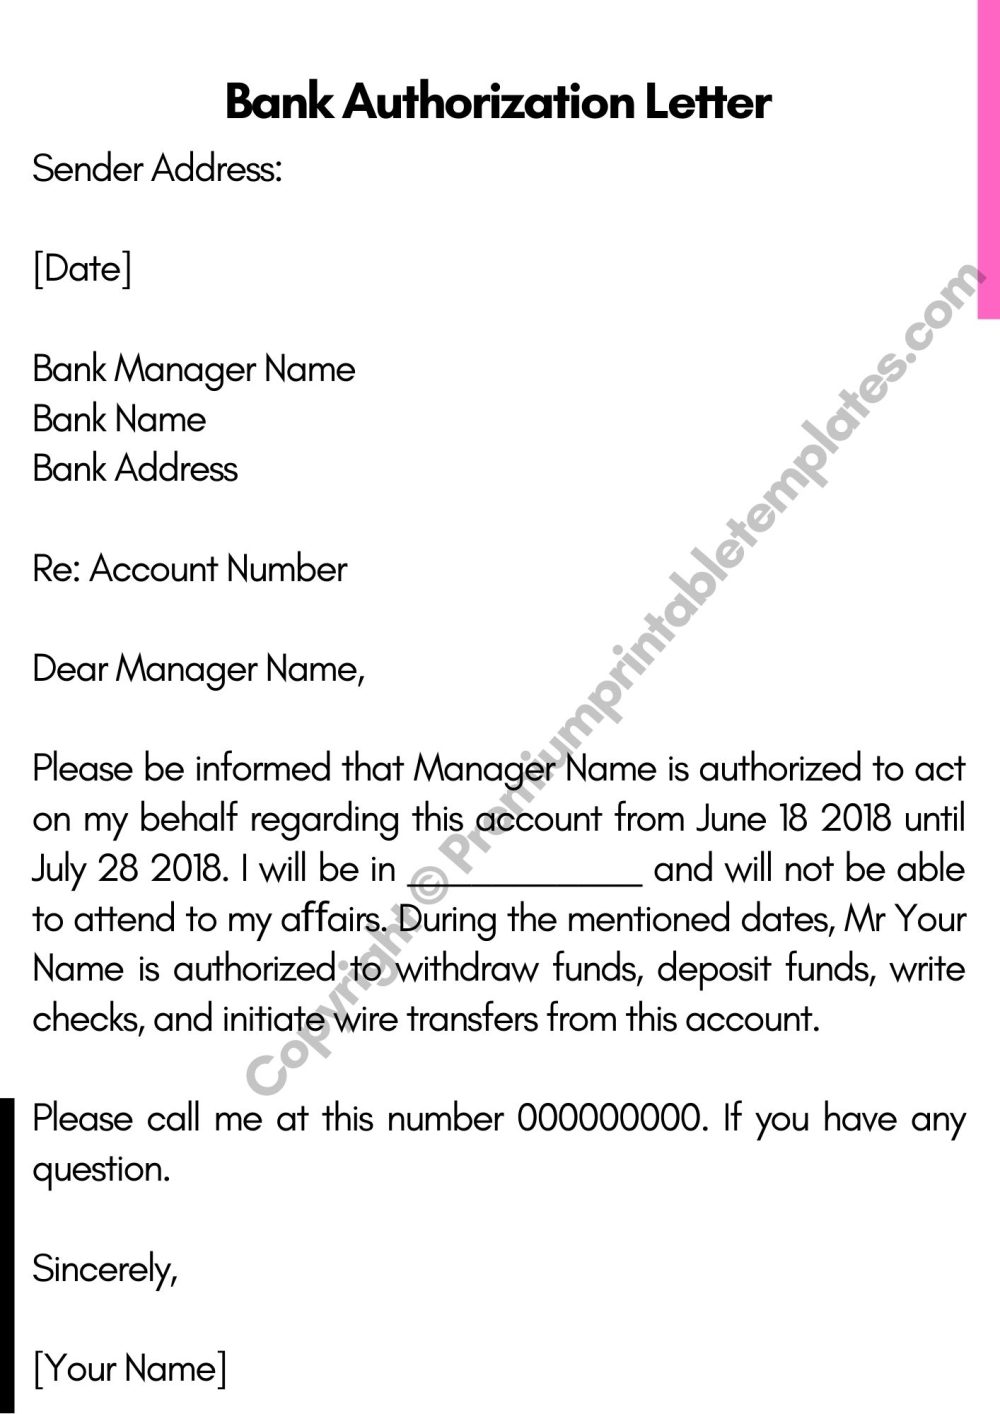 Bank Authorization Letter PDF